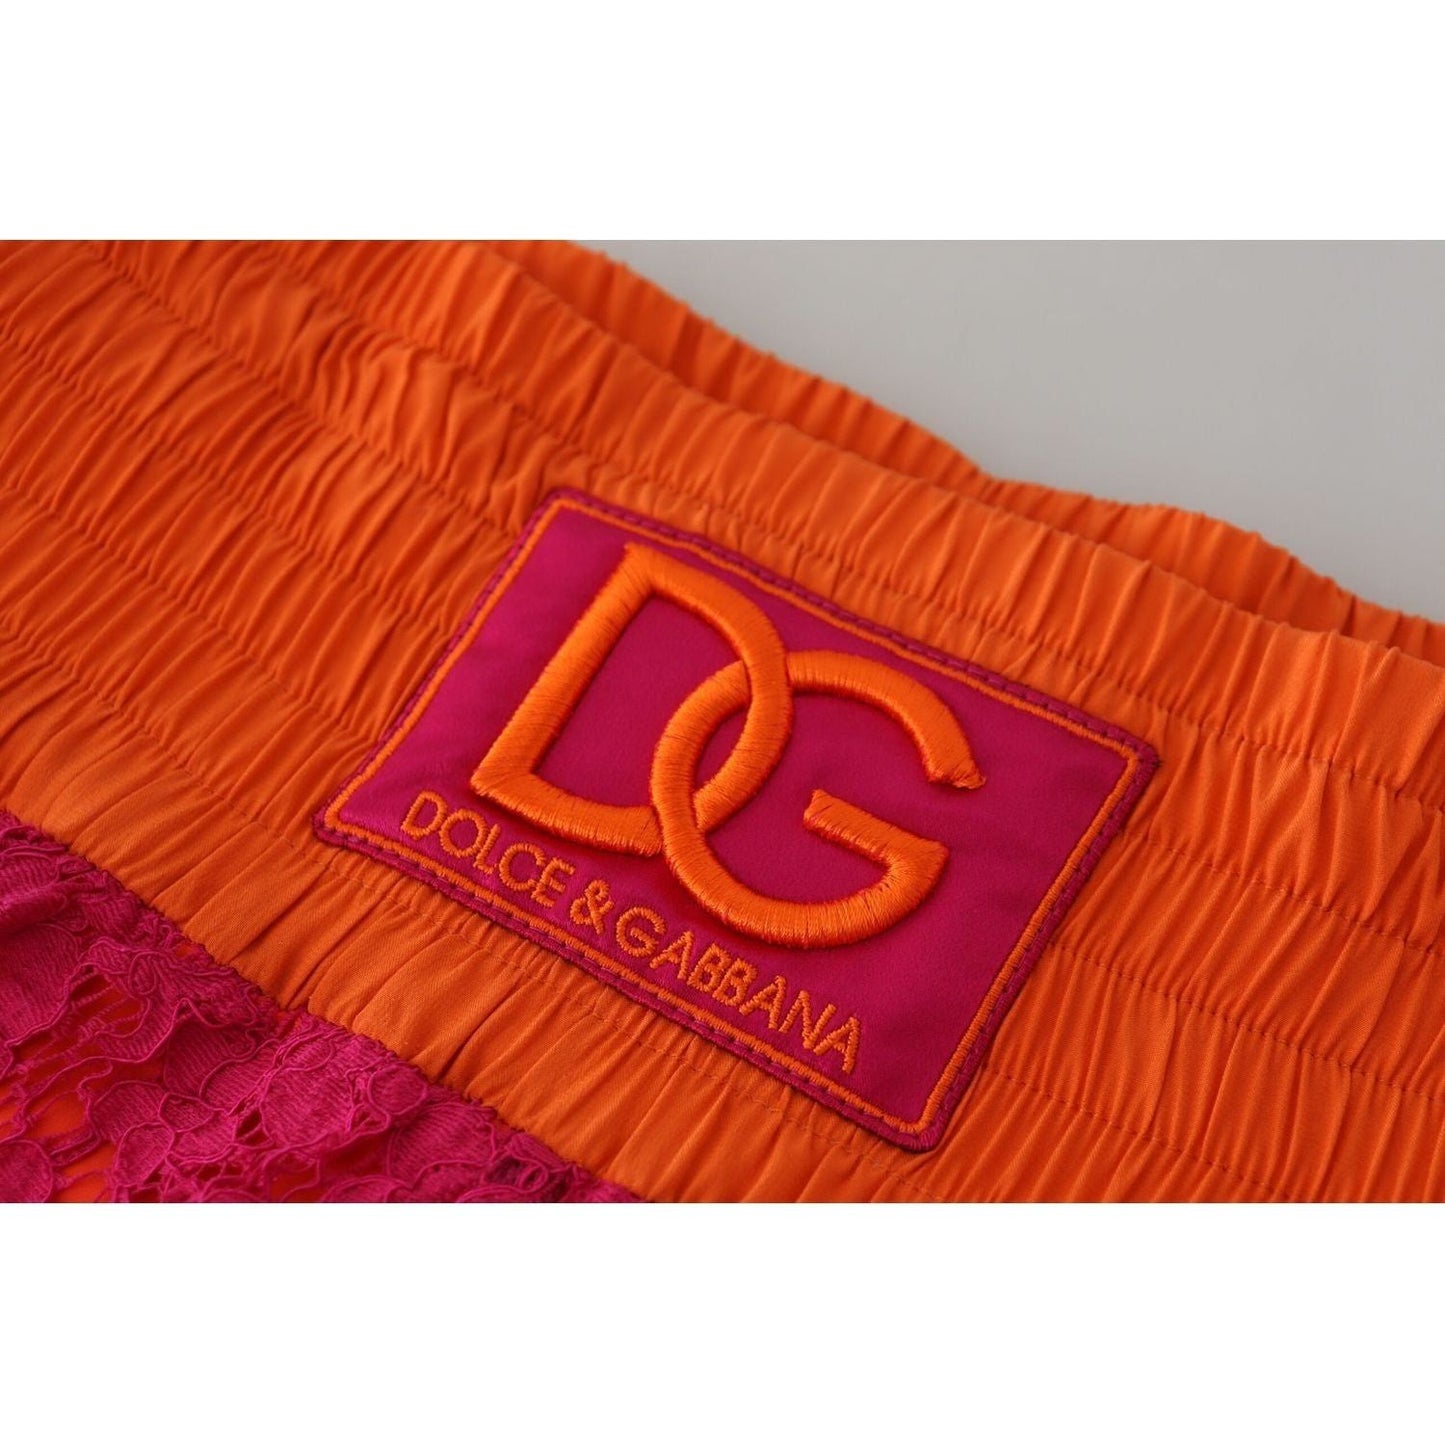 Dolce & Gabbana Elegant Lace High-Waist Shorts in Dual-Tones pink-orange-lace-cotton-high-waist-shorts